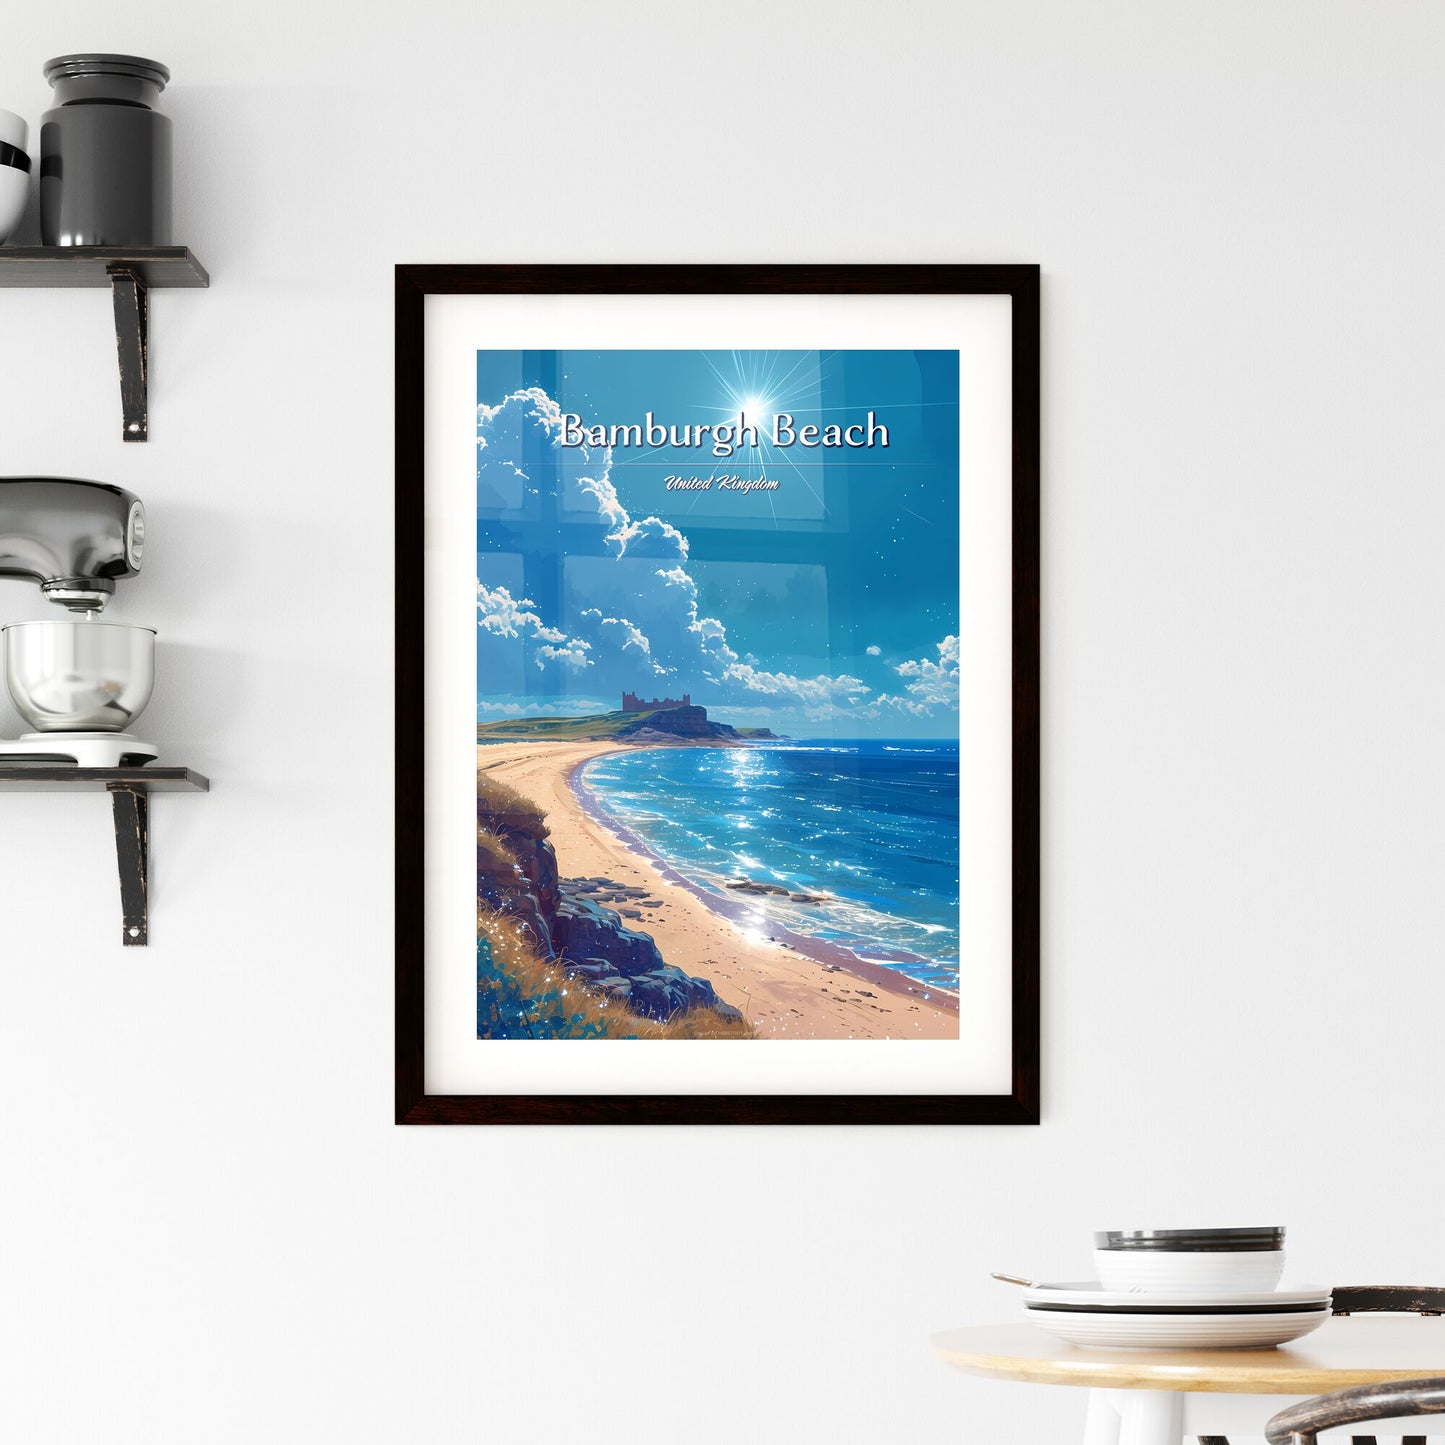 Bamburgh Beach, United Kingdom - Art print of a beach with a castle on the shore Default Title